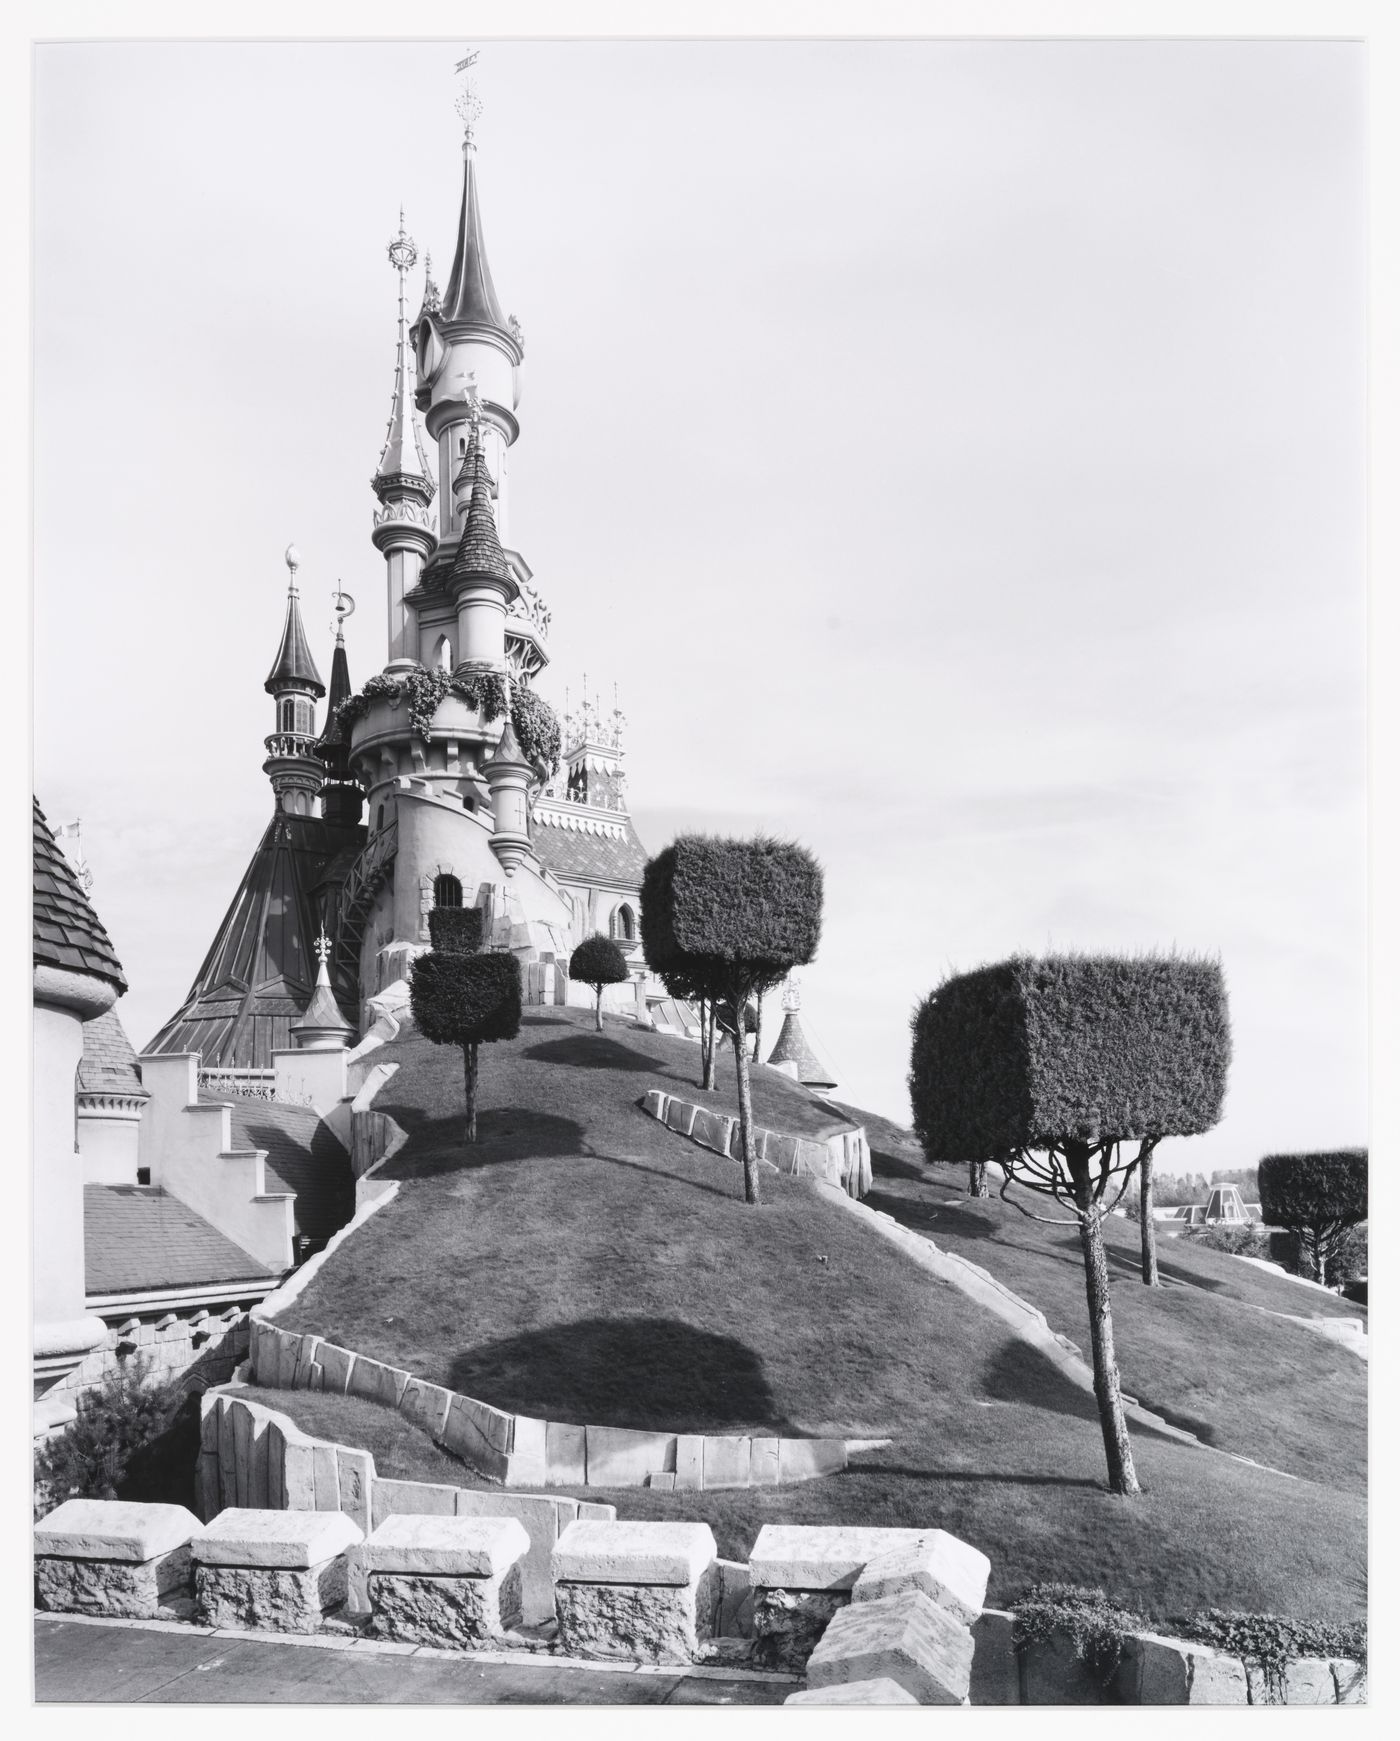 View of Sleeping Beauty Castle, Fantasyland, Disneyland, Anaheim, California